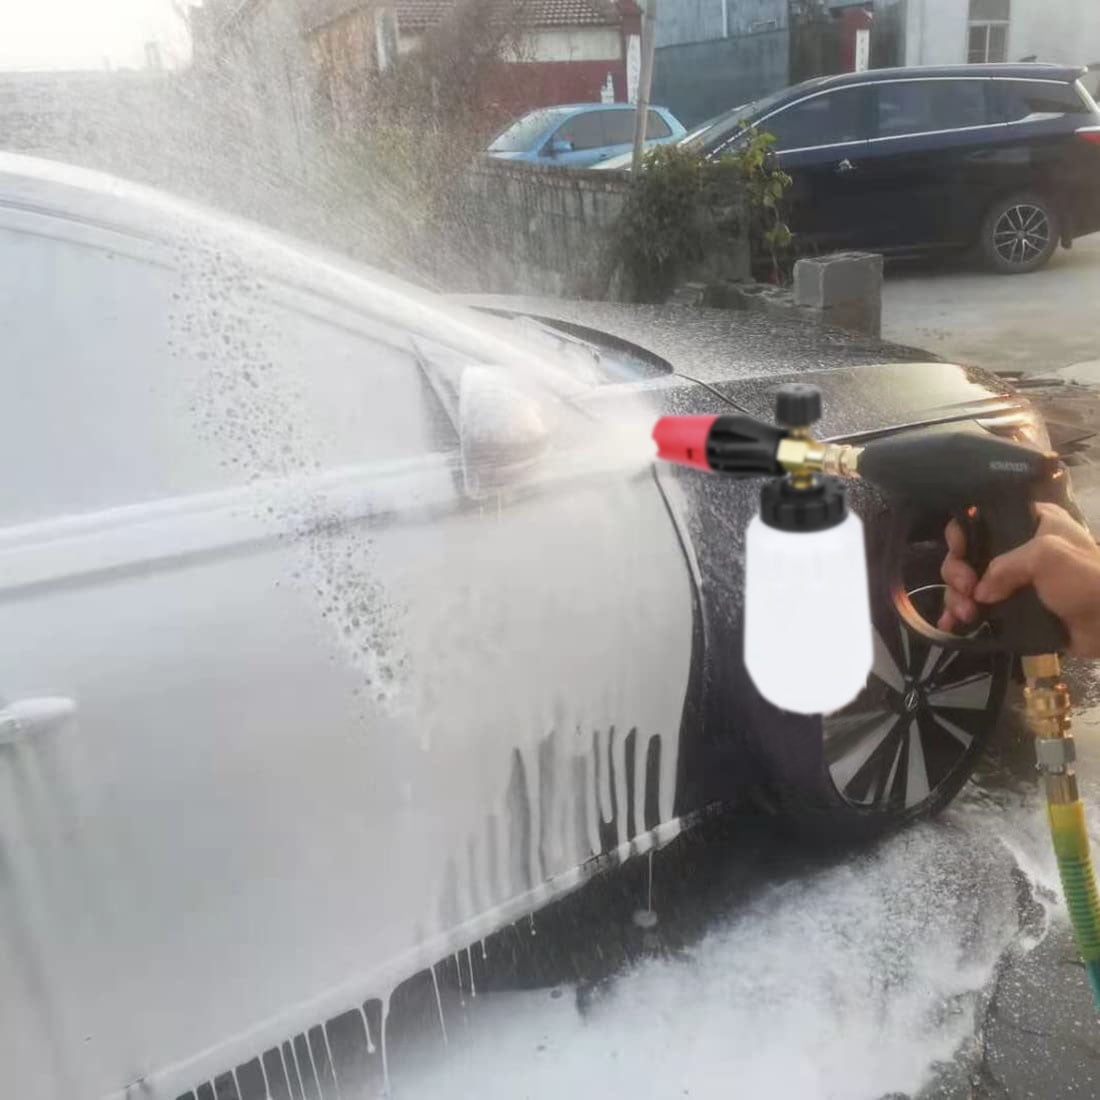 Car Wash Sprayer, iMountek 8 In 1 Foam Garden Hose Nozzle High